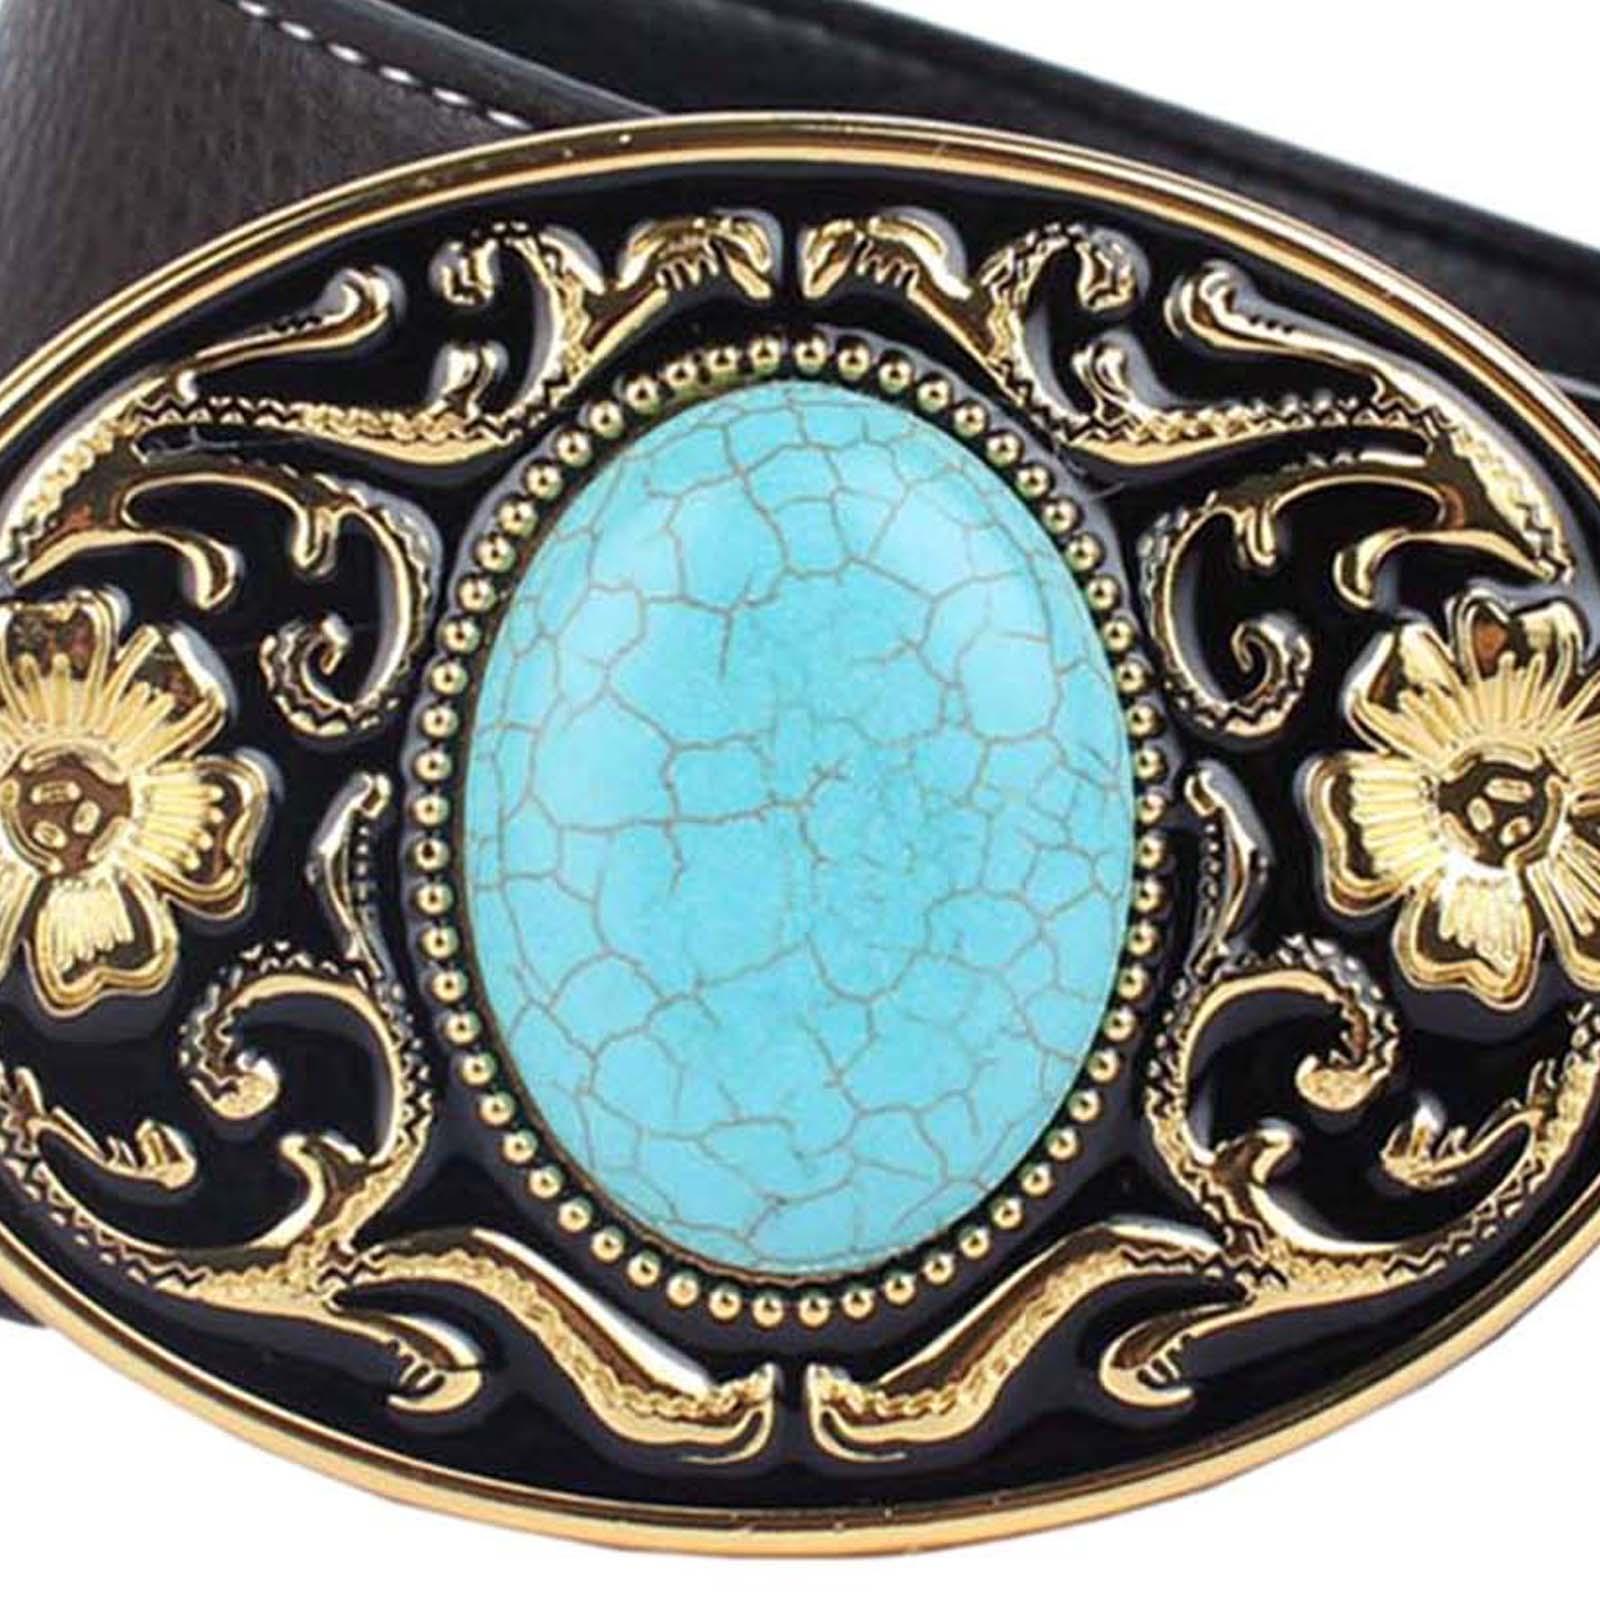 Western Cowboy Leather Belt With Arabesque Pattern Buckle Cowgirl Waist Belt